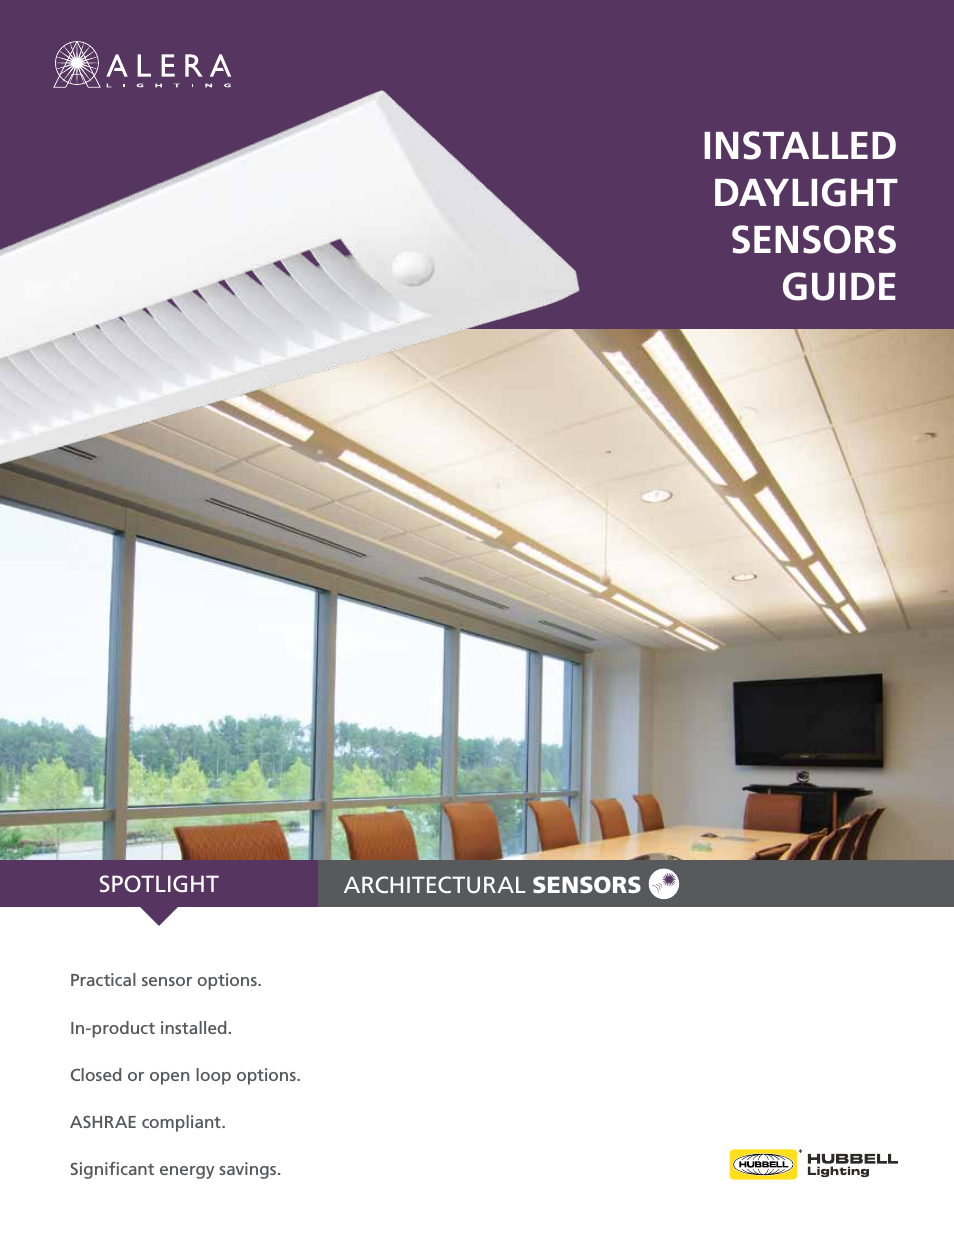 AL1072 - Installed Daylight Sensors Guide